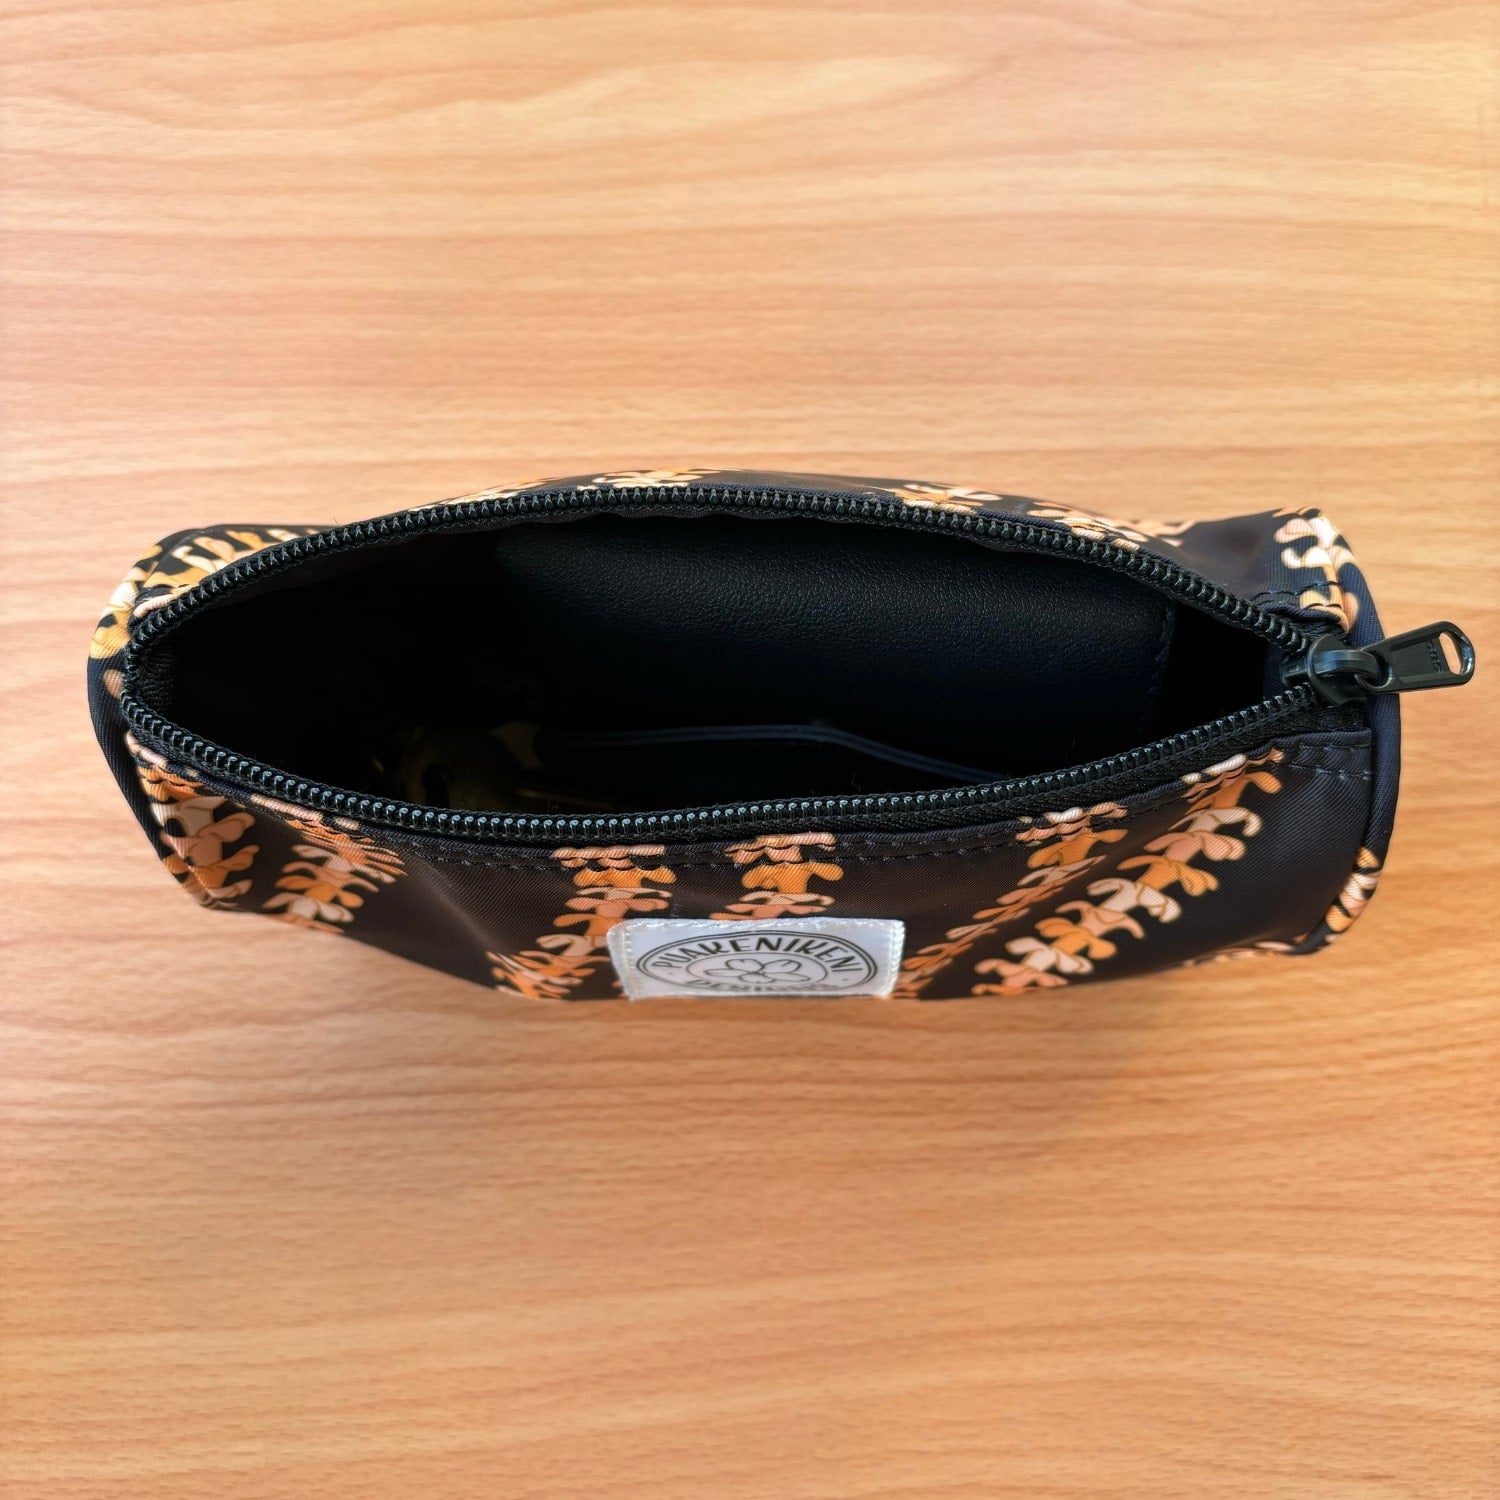 grab and go set includes mini zipper pouch and wristlet key fob in kaulua black orange lei - from Puakenikeni Designs - top view of mini zipper pouch